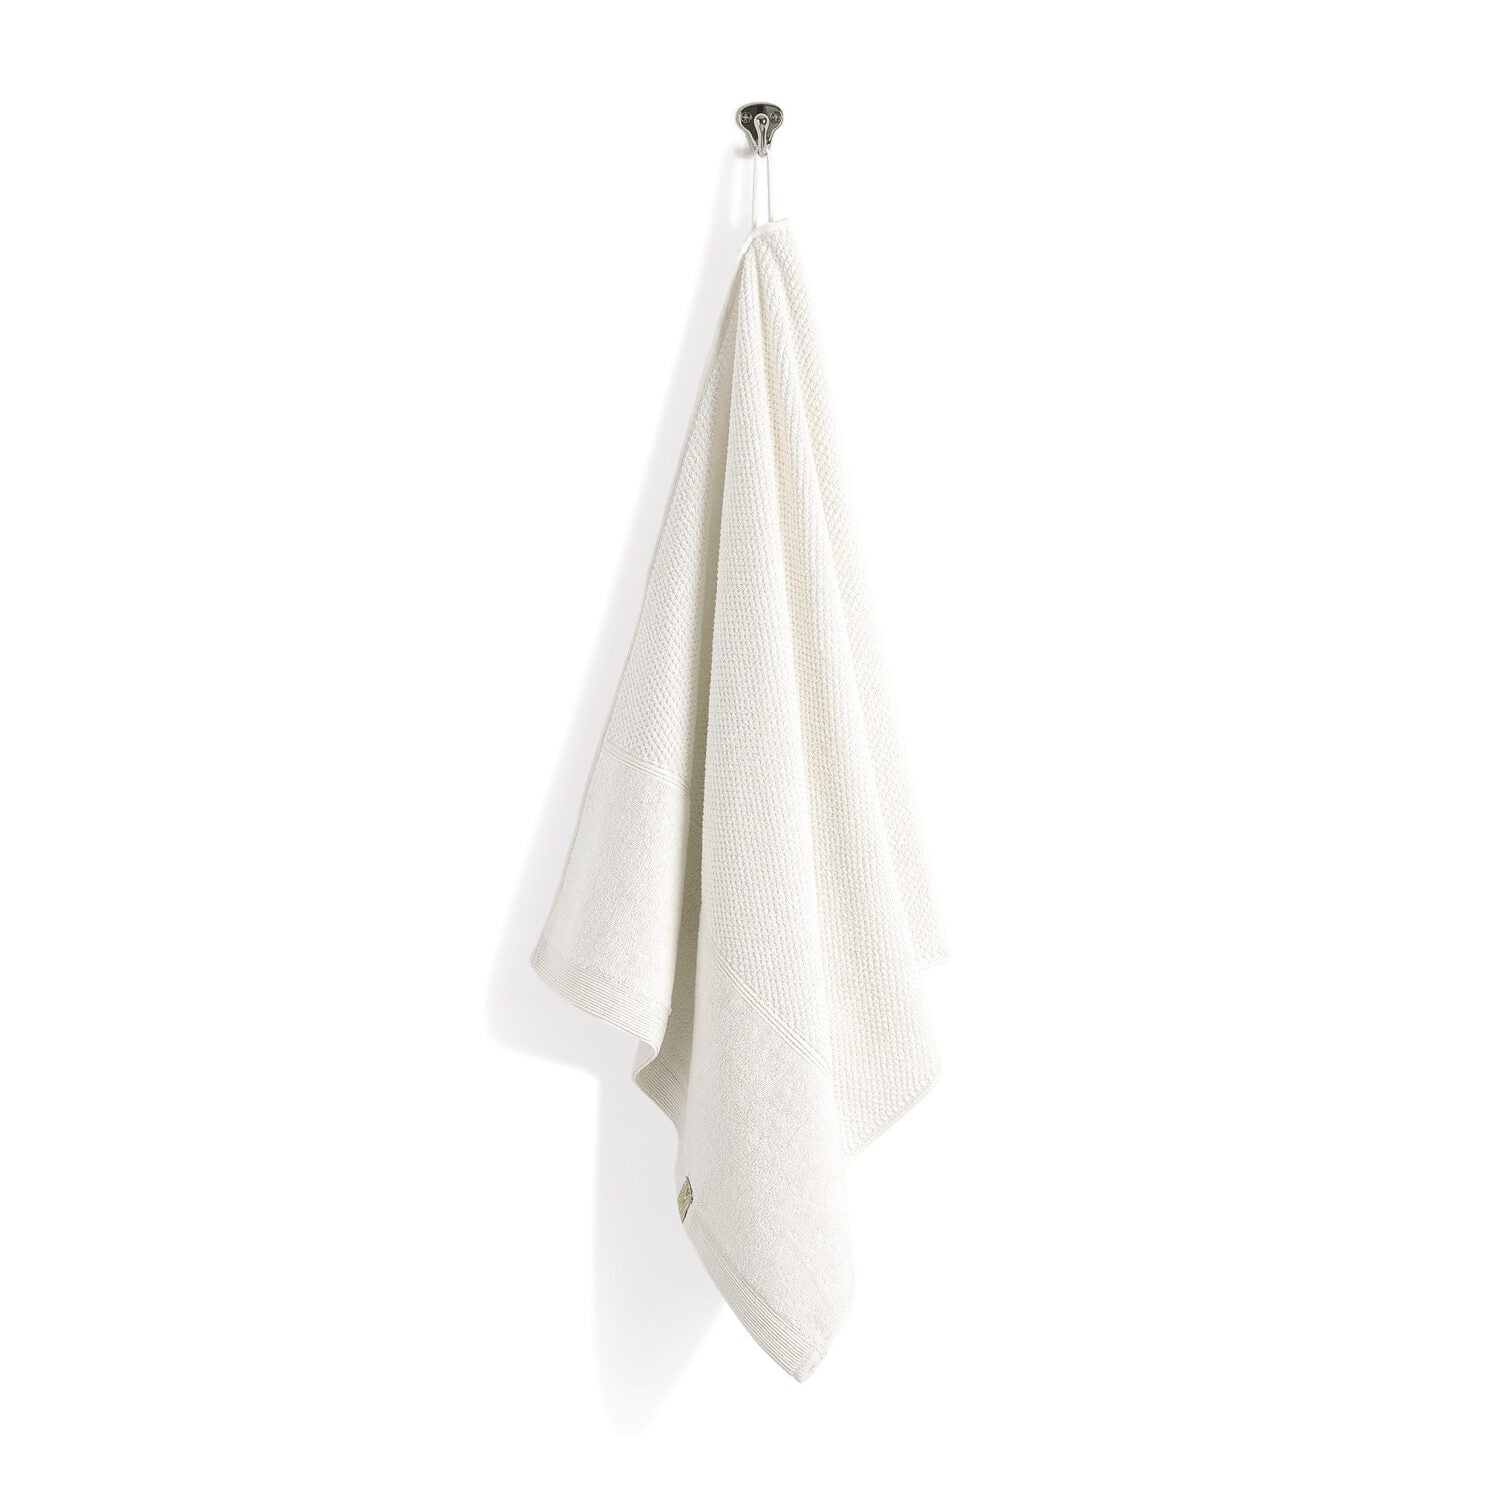 Kushel Handtuch The Hand Towel - verschiedene Farben_cloud-white2